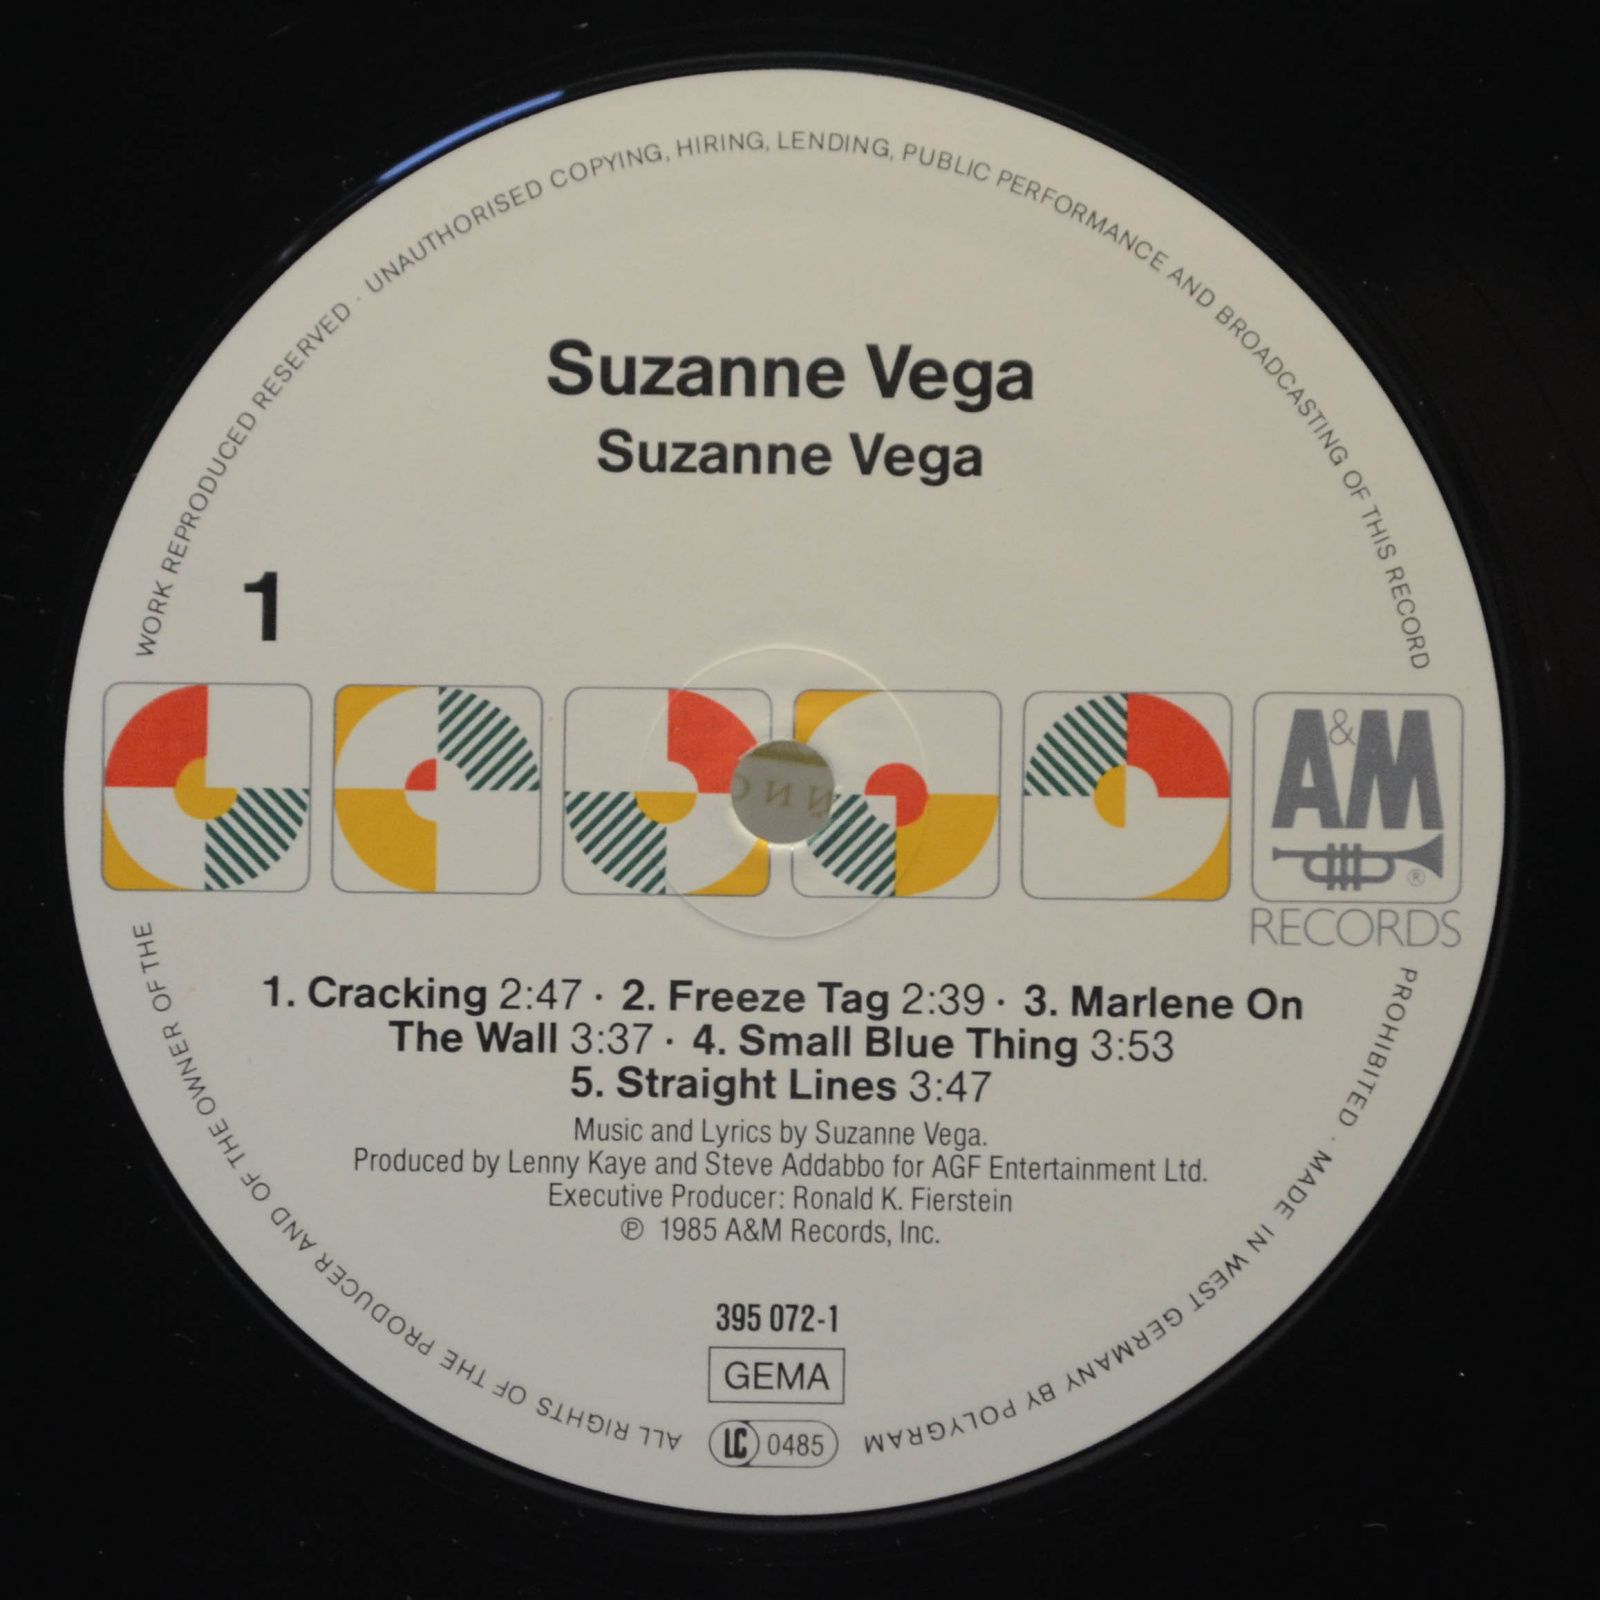 Suzanne Vega — Suzanne Vega, 1985